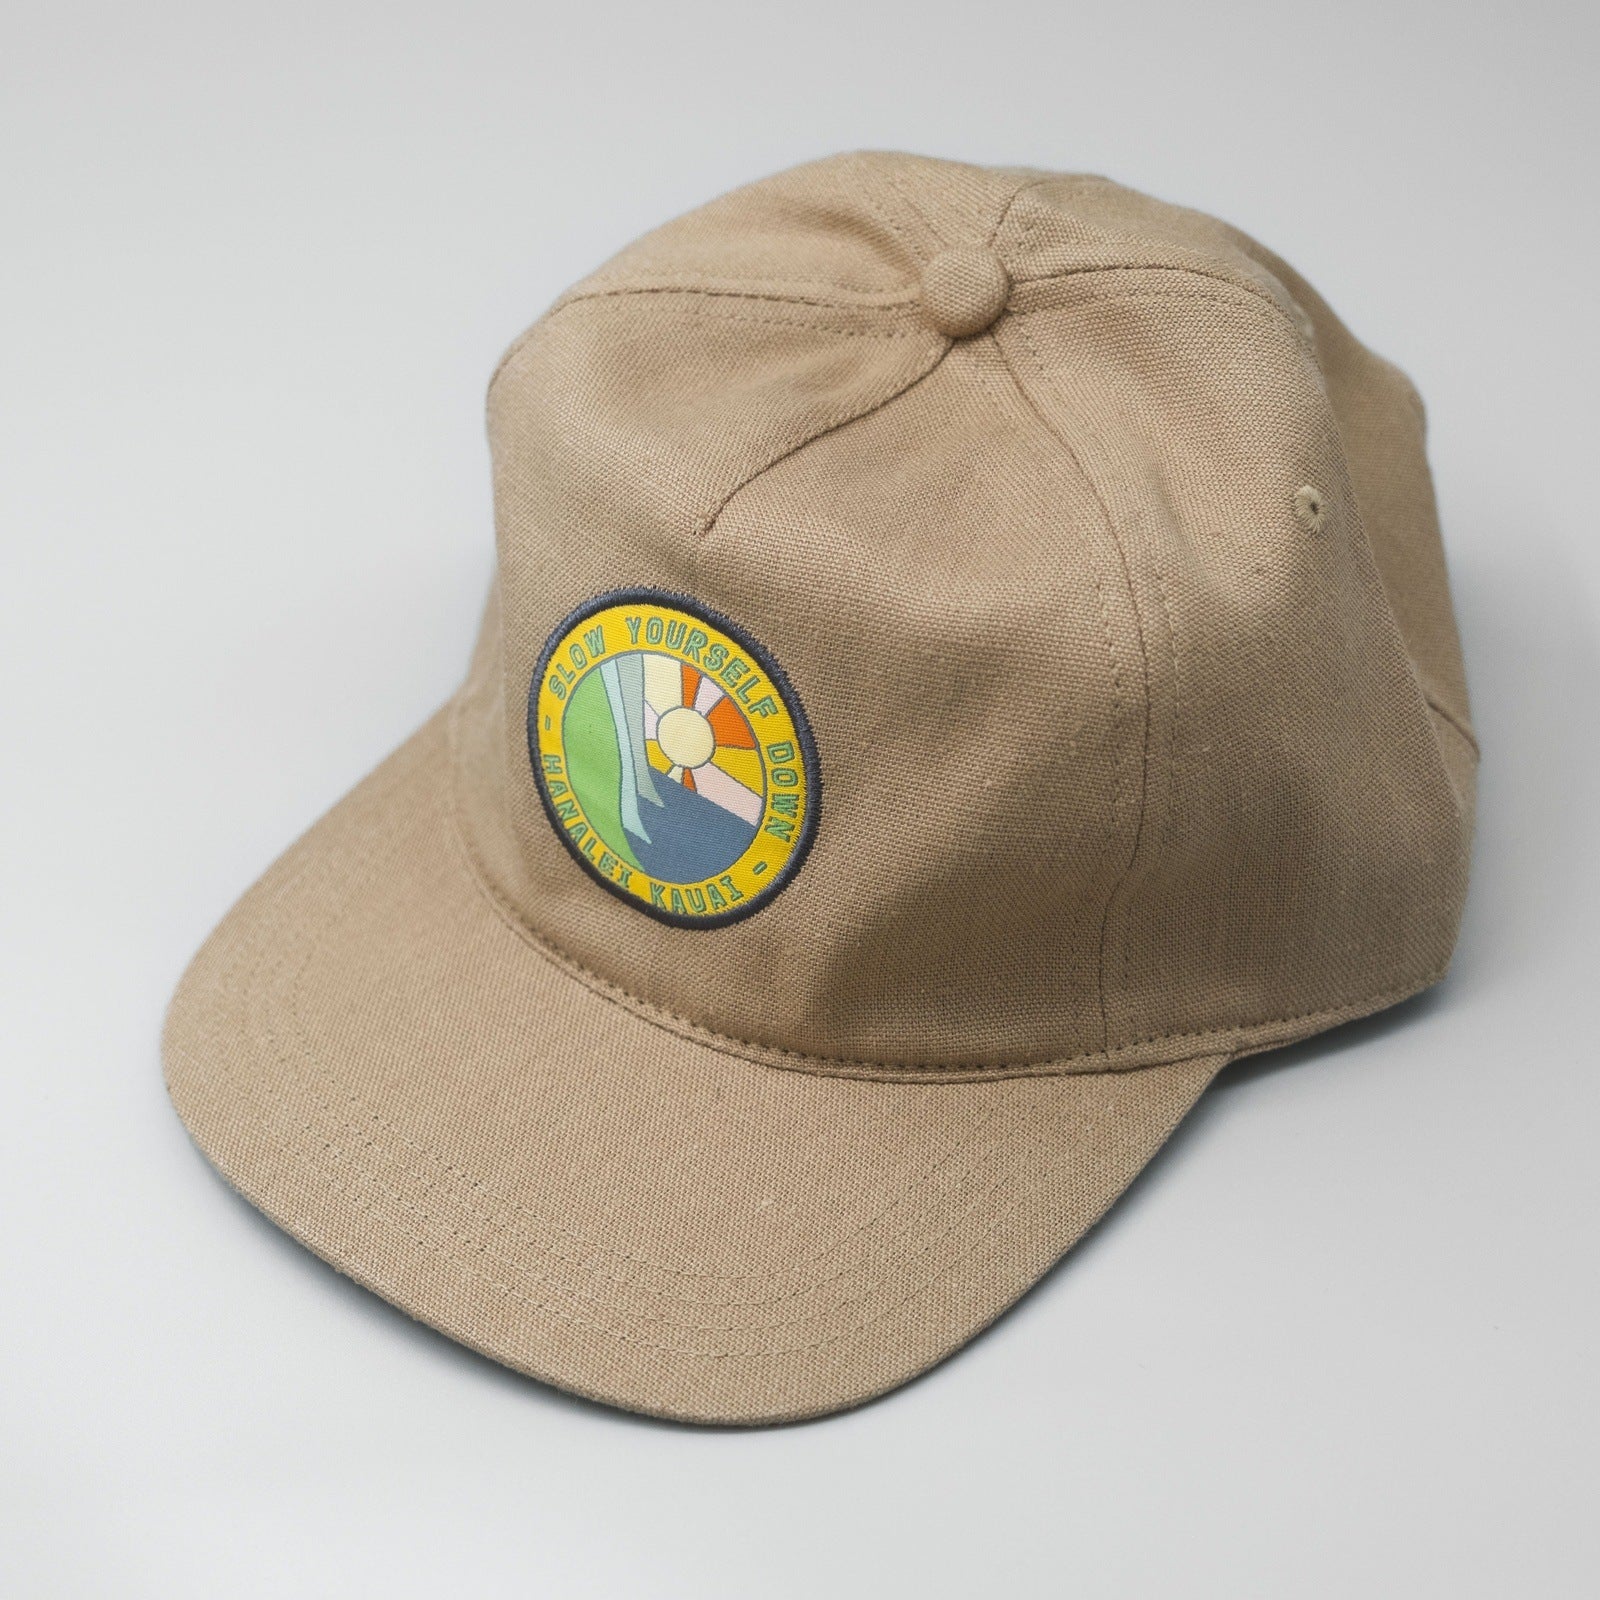 Napali Coast Hemp Baseball Hat Hats - Slow Yourself Down